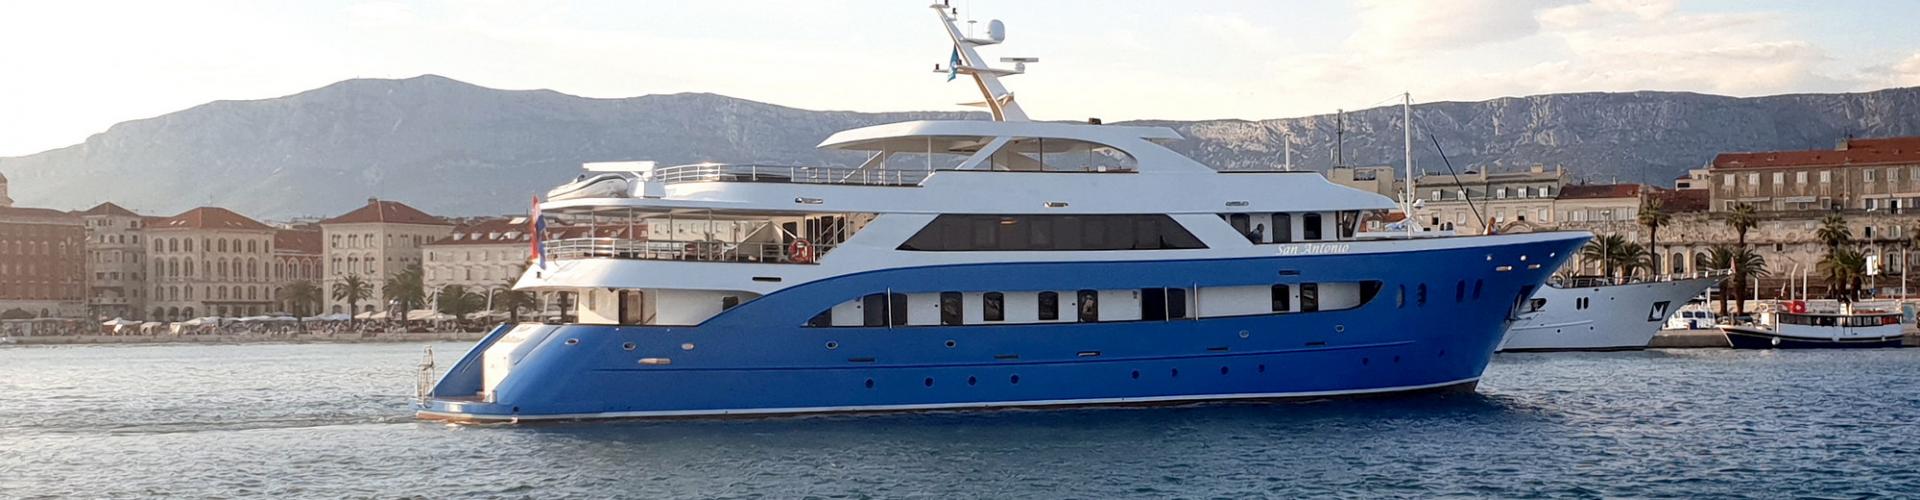 Deluxe cruiser MV San Antonio- motor yacht